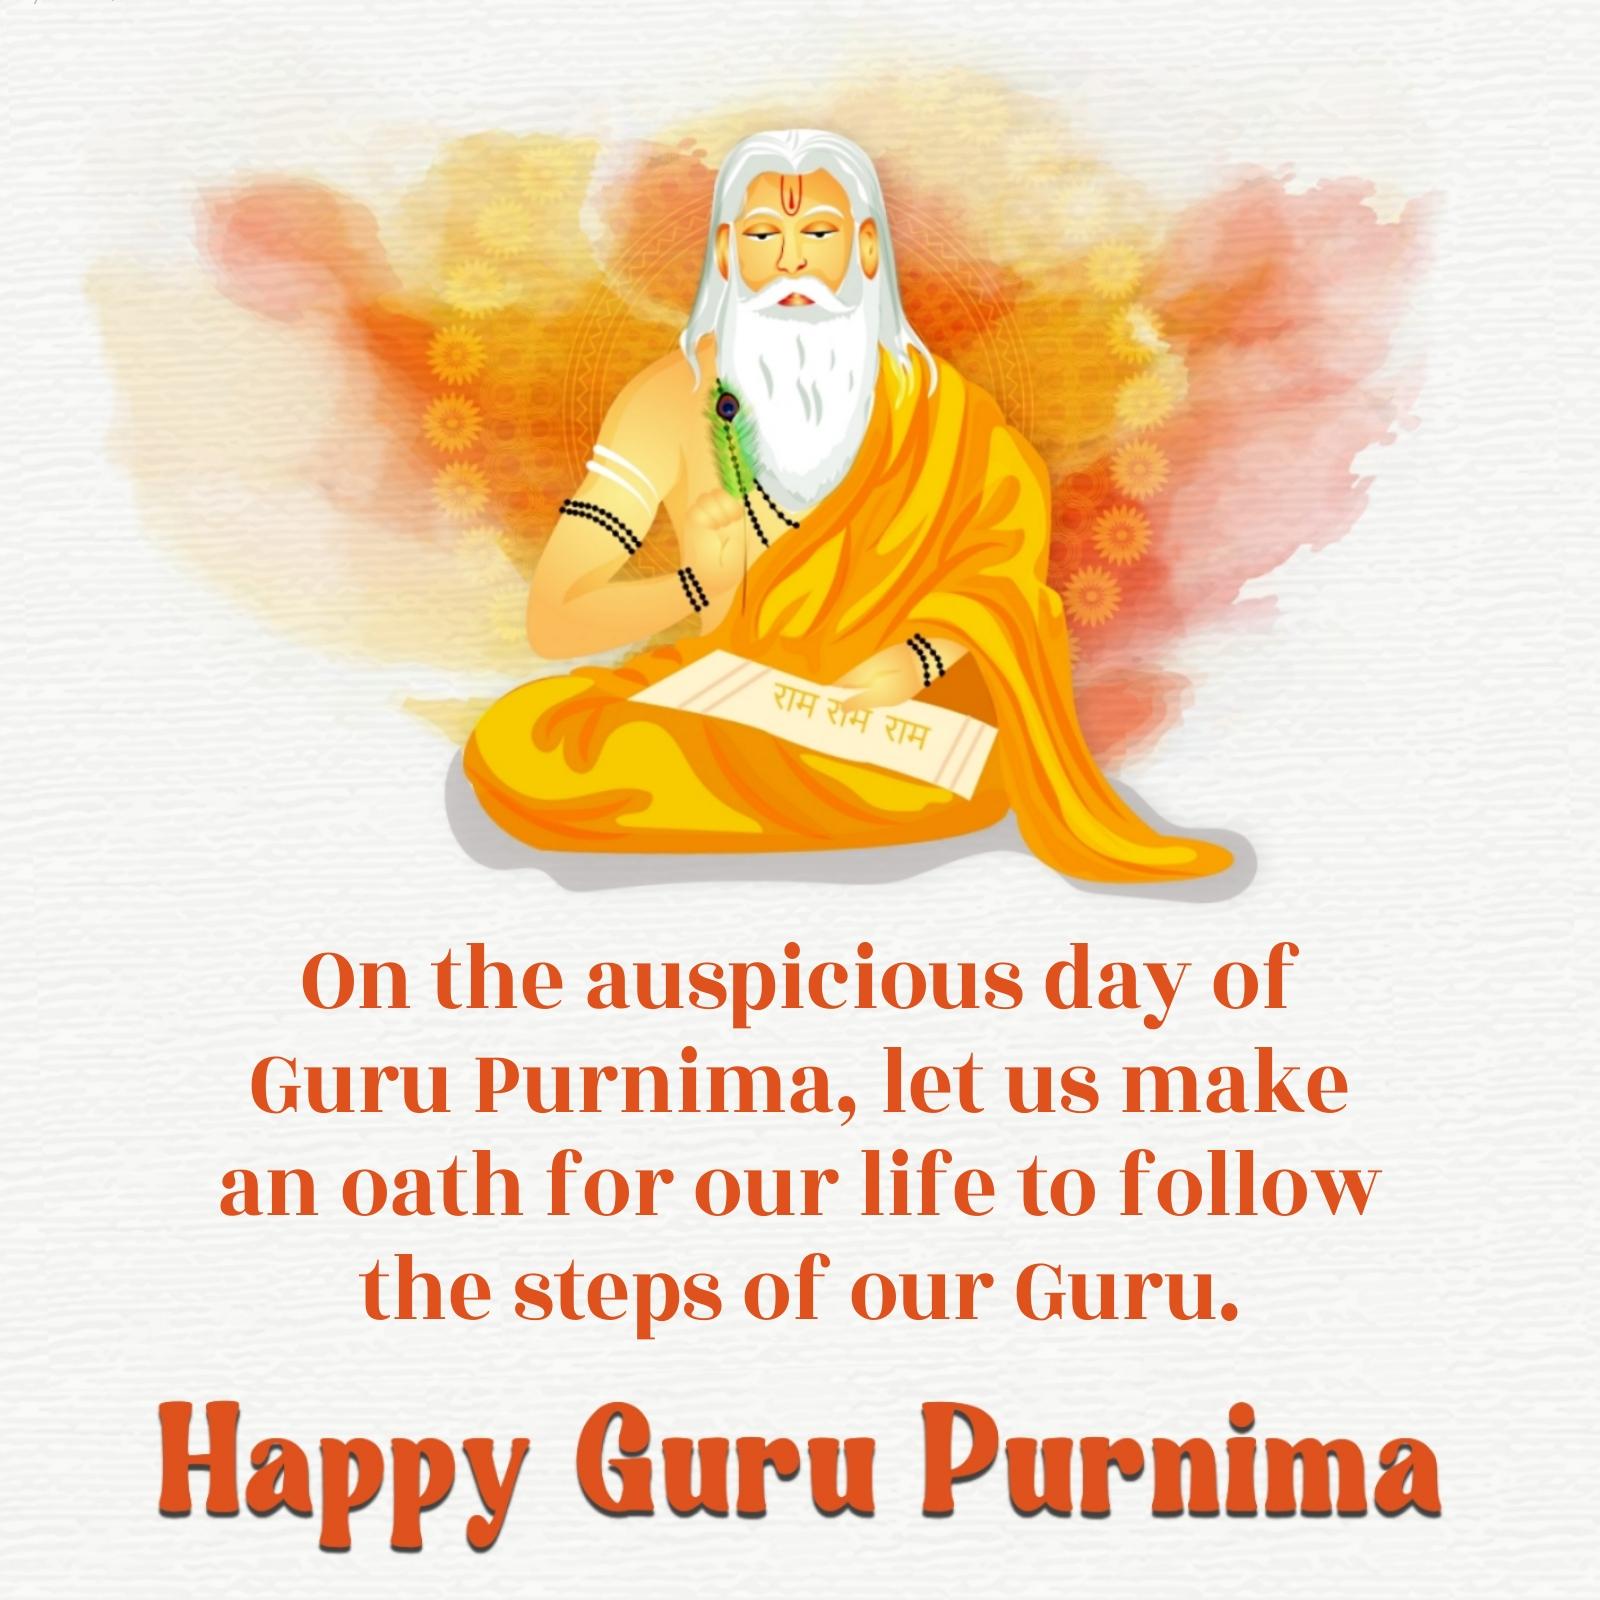 On the auspicious day of Guru Purnima let us make an oath